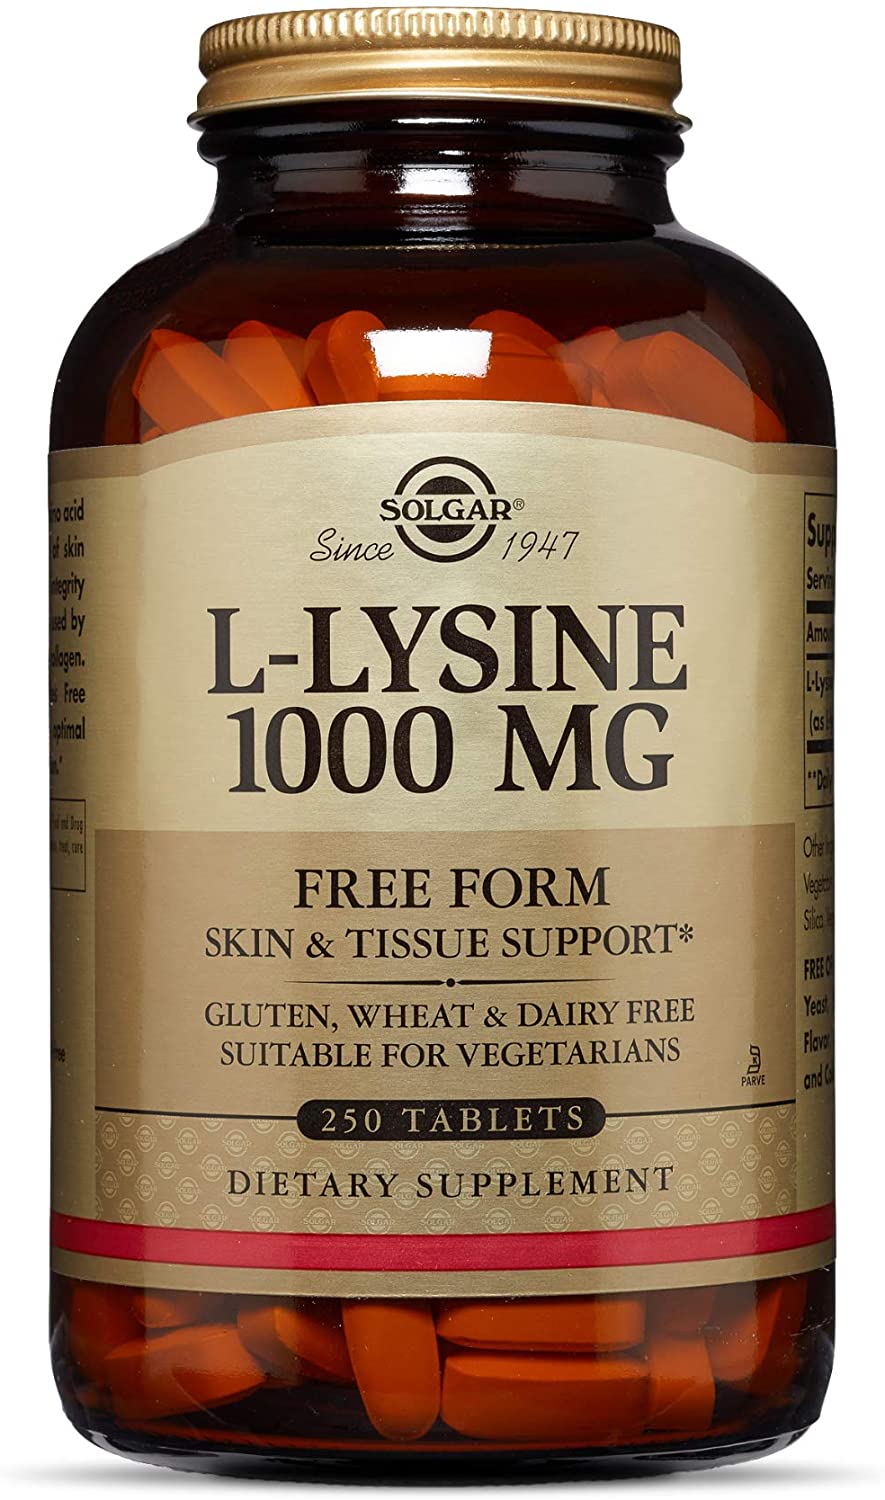 Solgar L-Lysine, Free Form, 1000 Mg, 250 Tablets